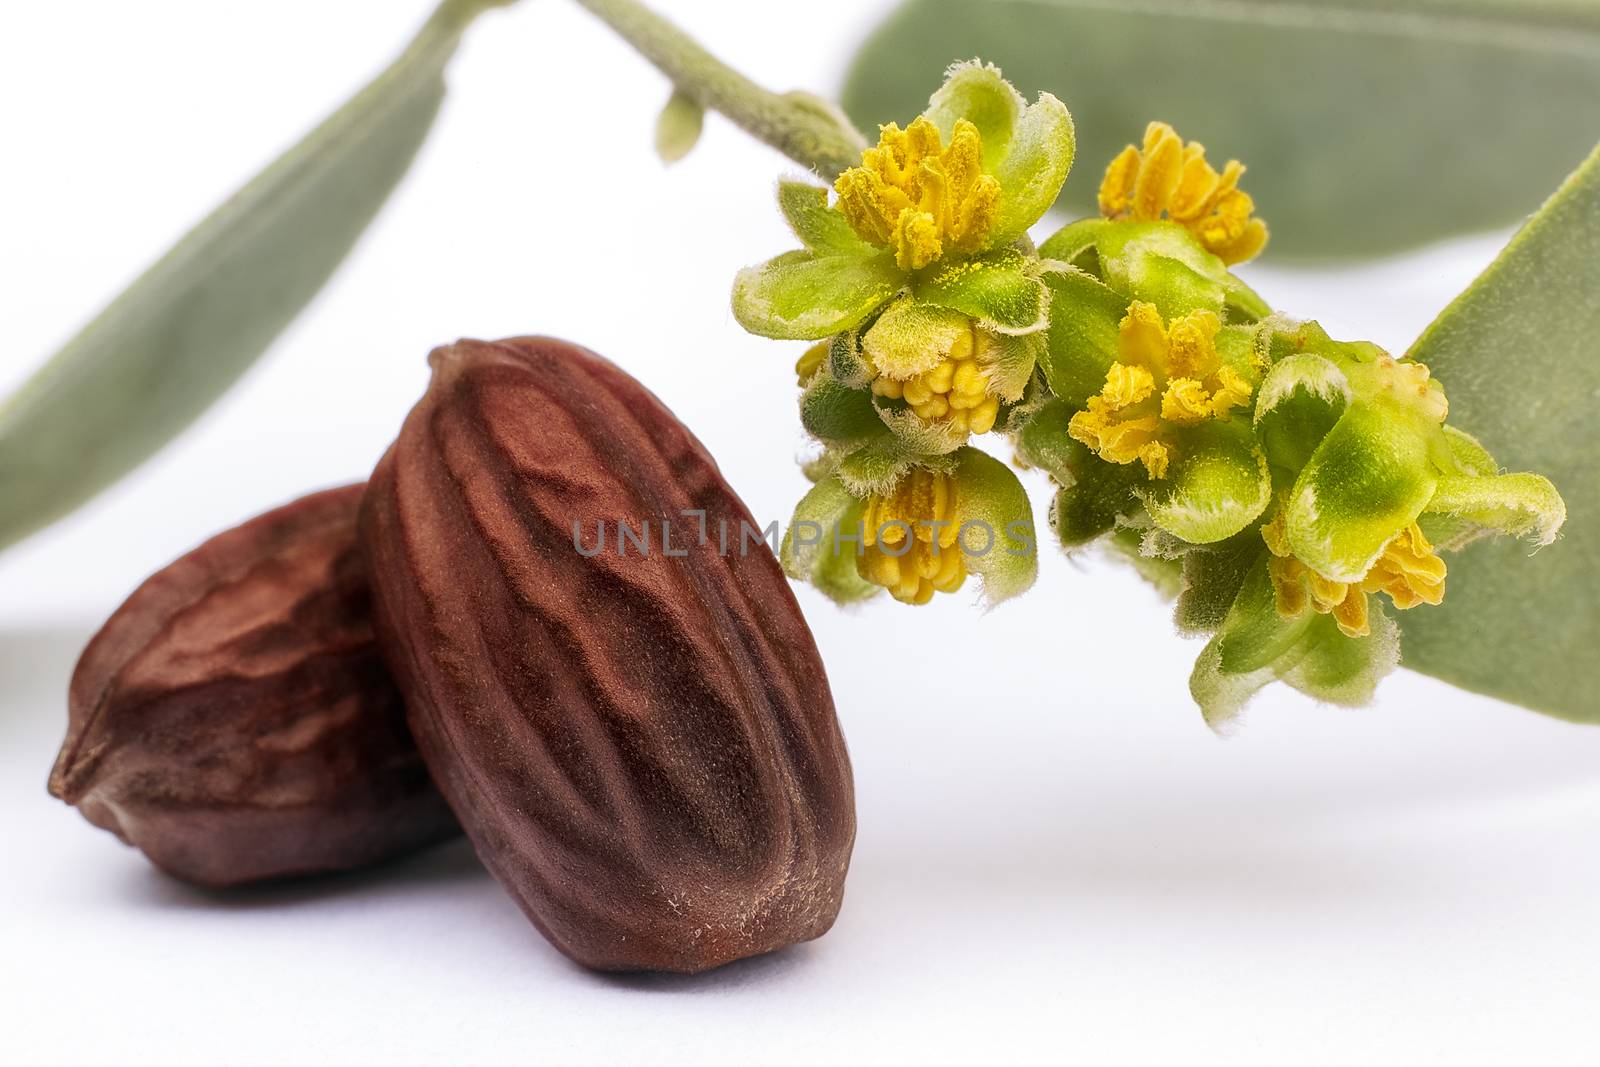 Jojoba seeds and flowers (Simmondsia chinensis) by vainillaychile